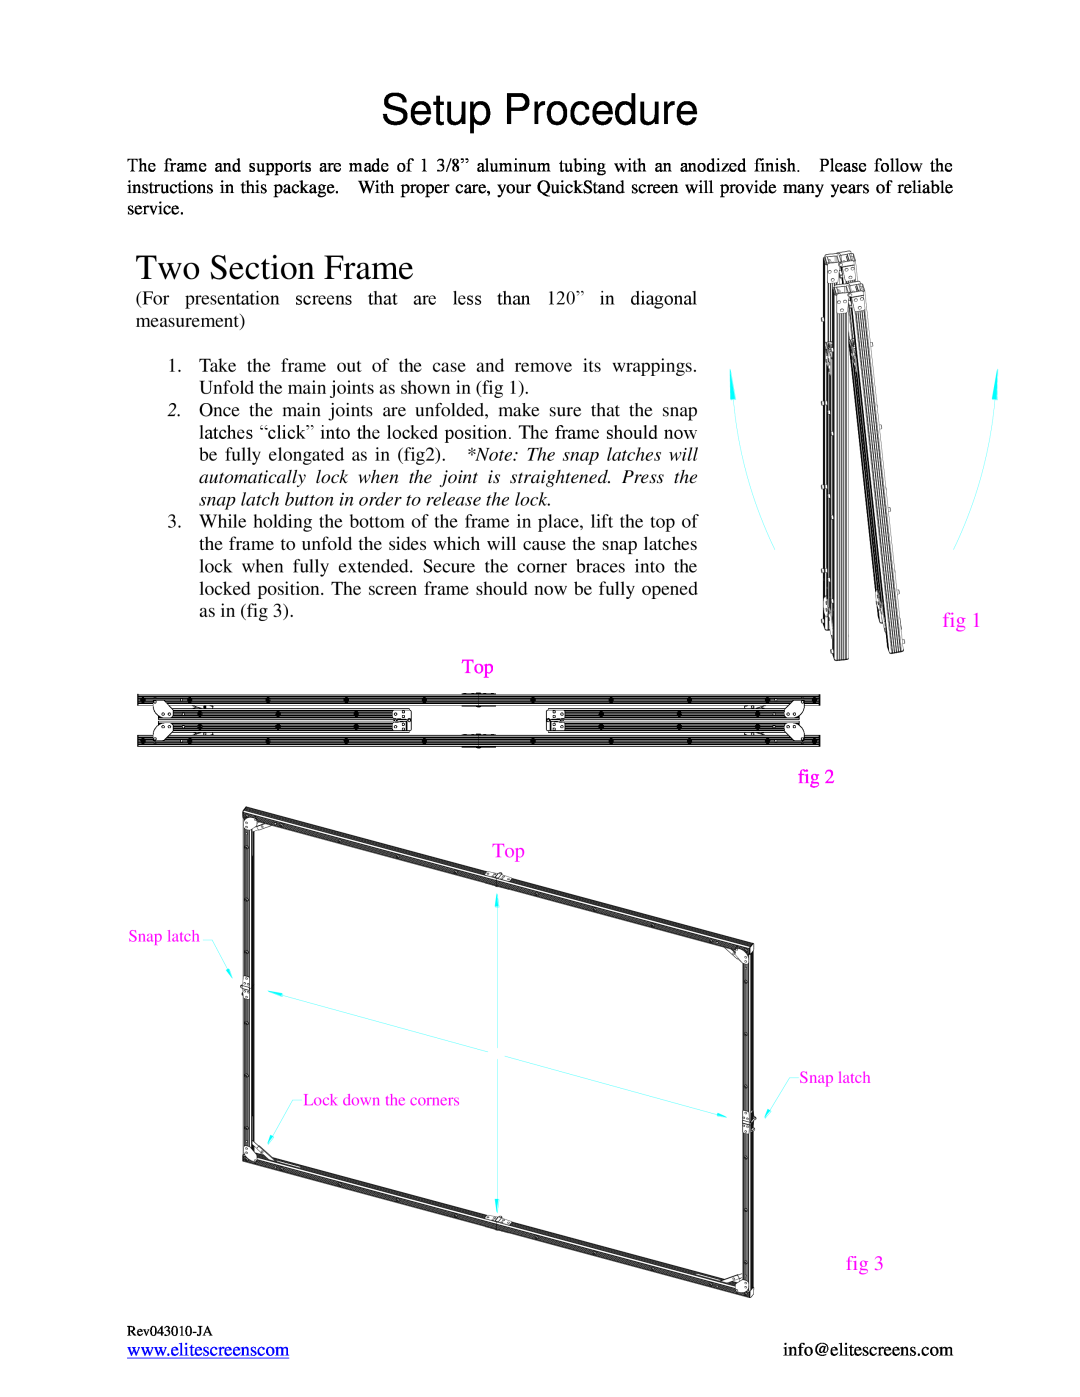 Elite Screens REV043010-JA manual Two Section Frame, Setup Procedure 